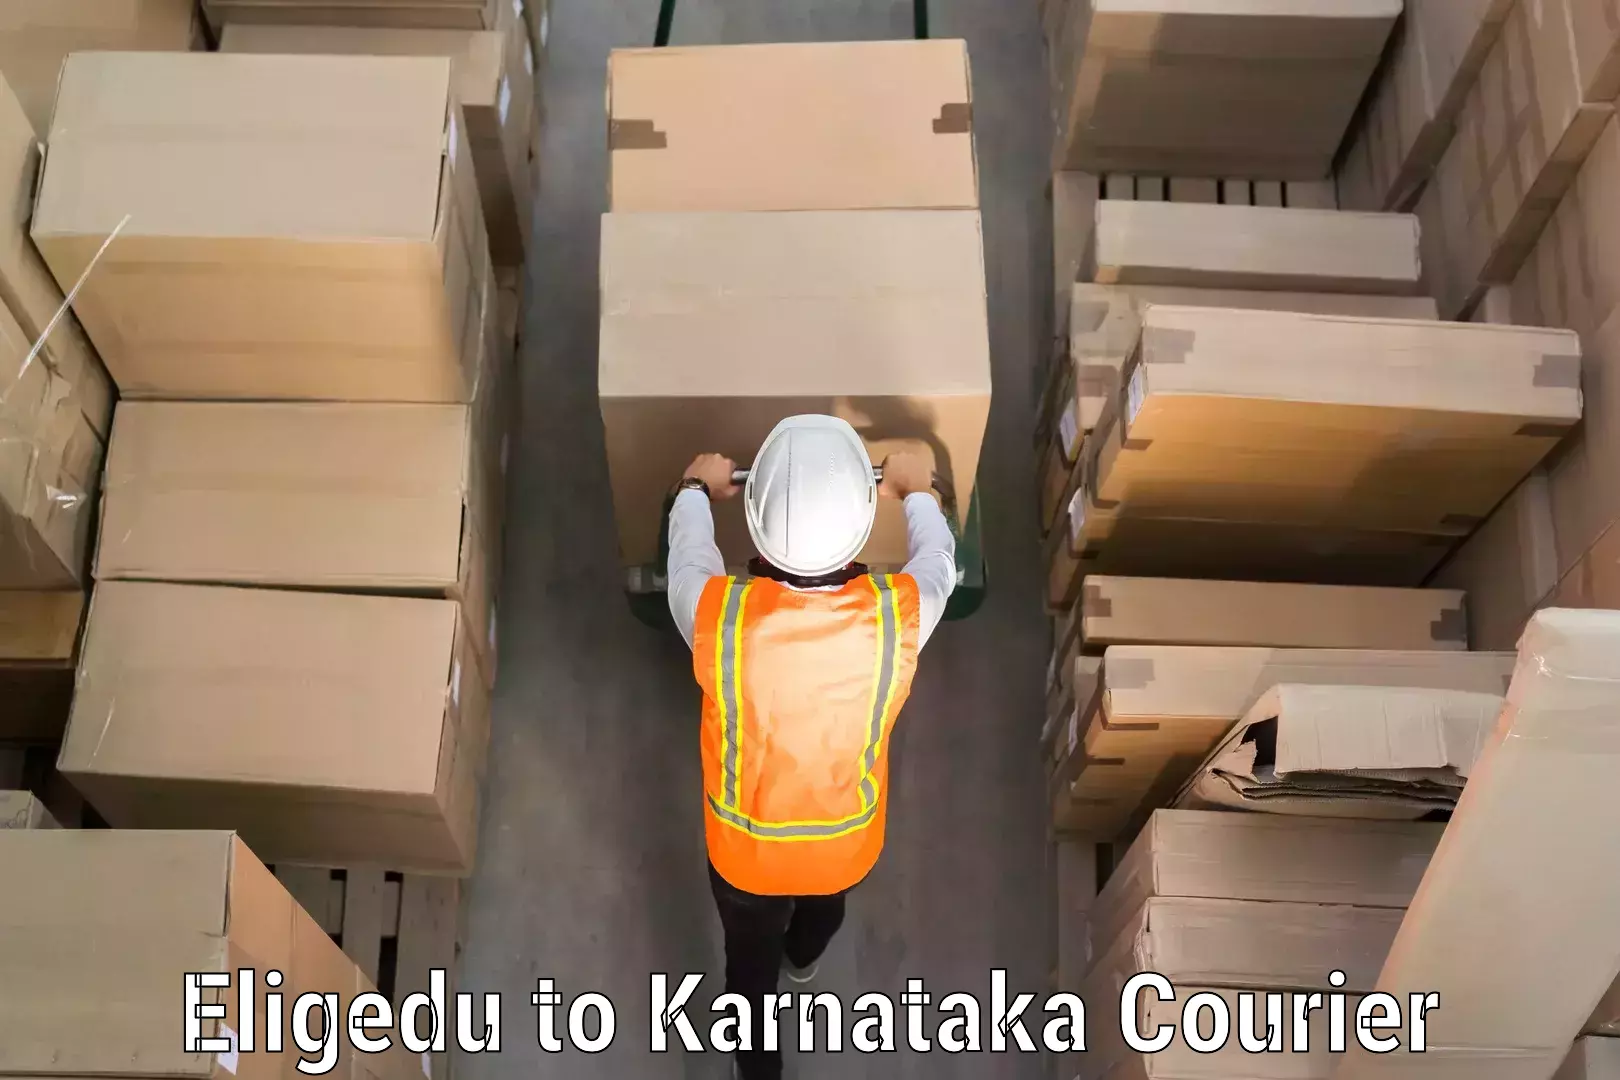 Luggage transport service Eligedu to Karnataka